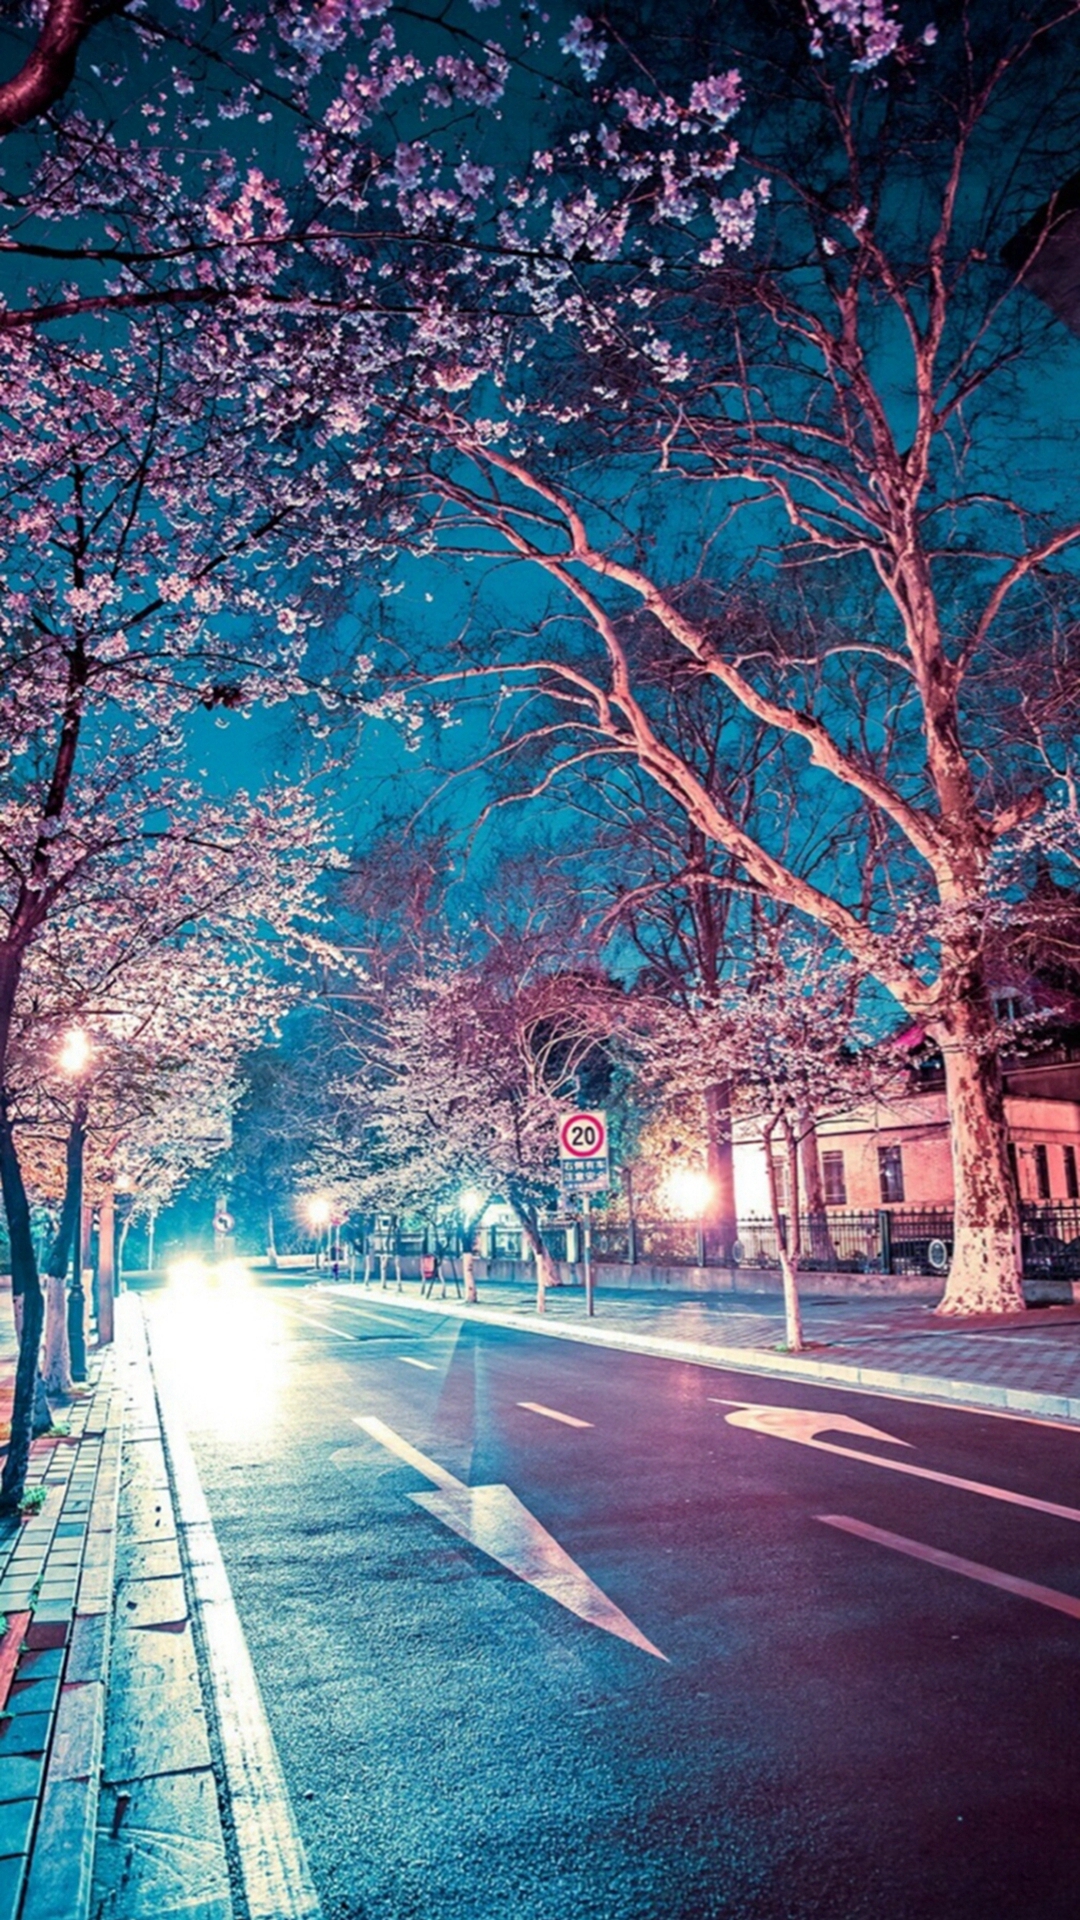 Japanese Street Cherry Blossom Night Scenery iPhone 8 Wallpaper Free Download